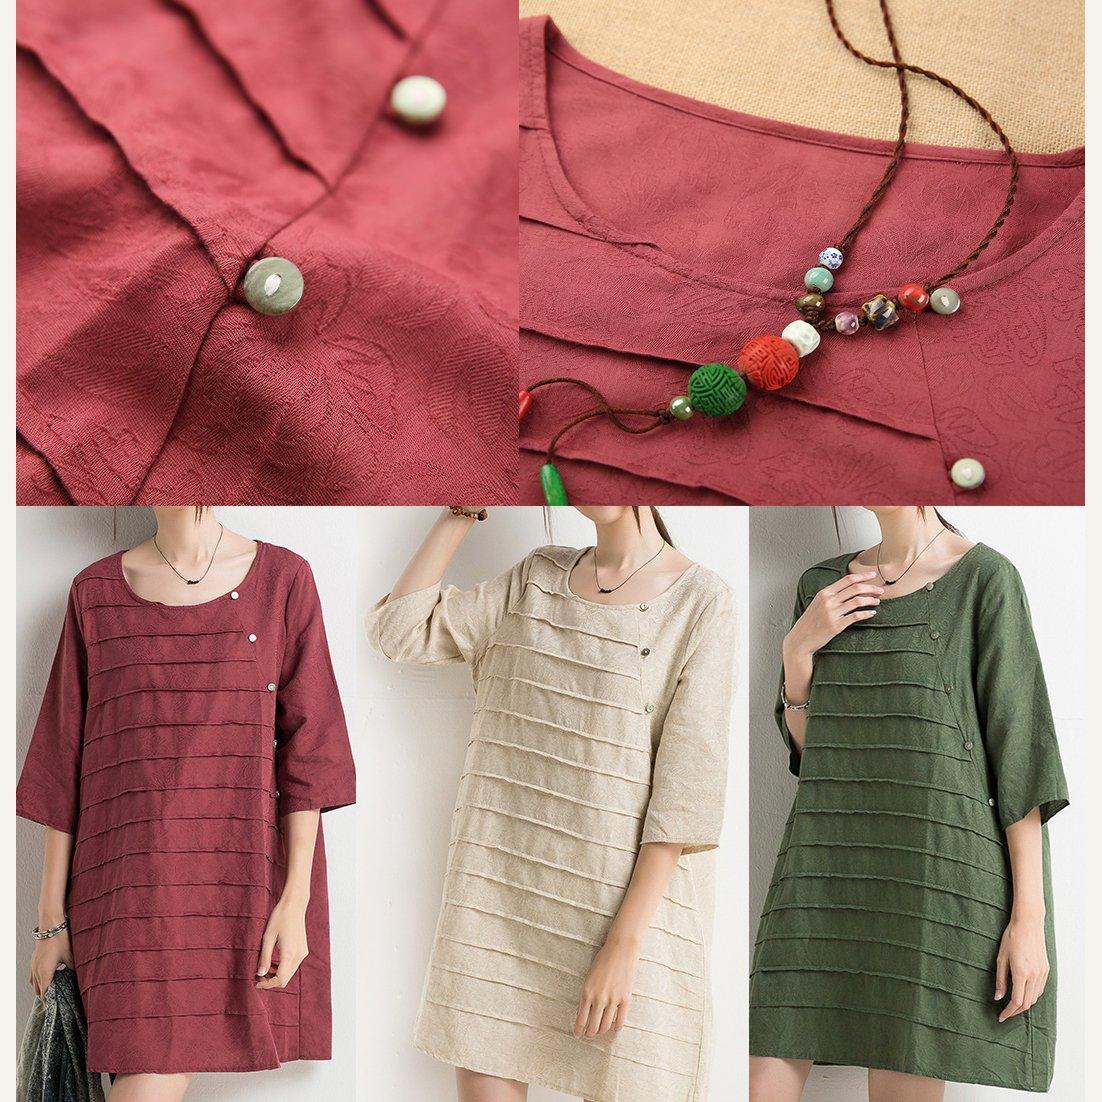 Burgundy Vintage sundress cotton dresses for summer plus size maternity dress blouse half sleeve - Omychic